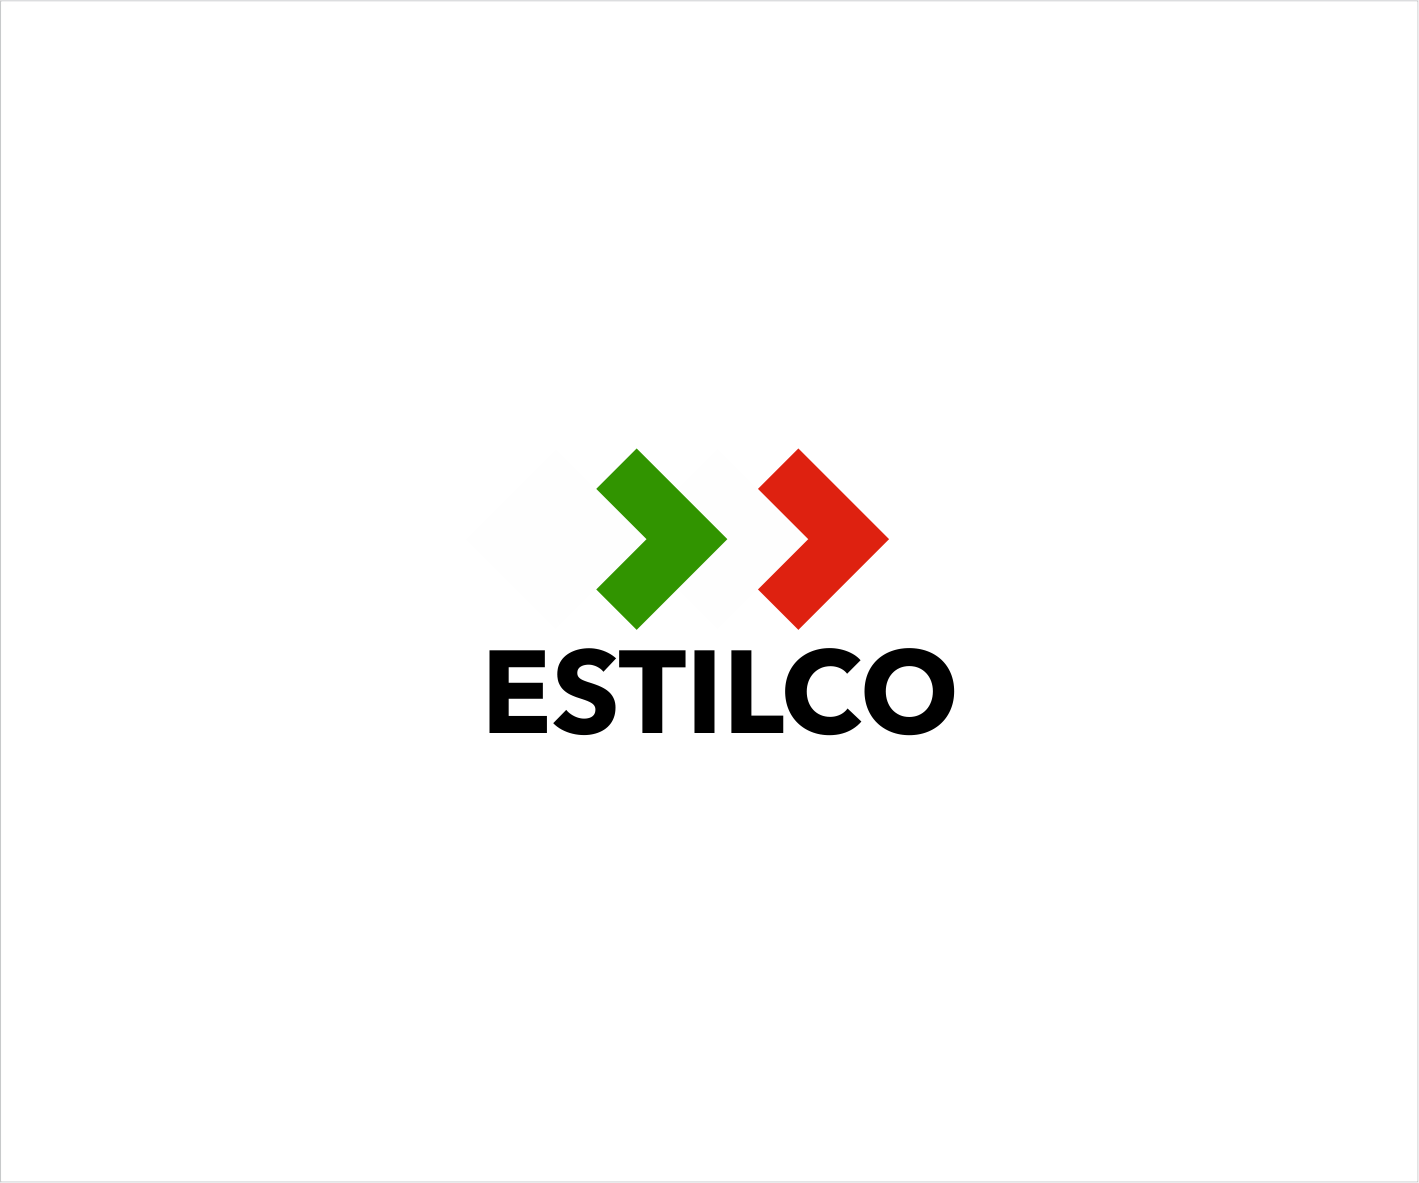 Distributor Logo - Modern, Professional, Distributor Logo Design for ESTILCO